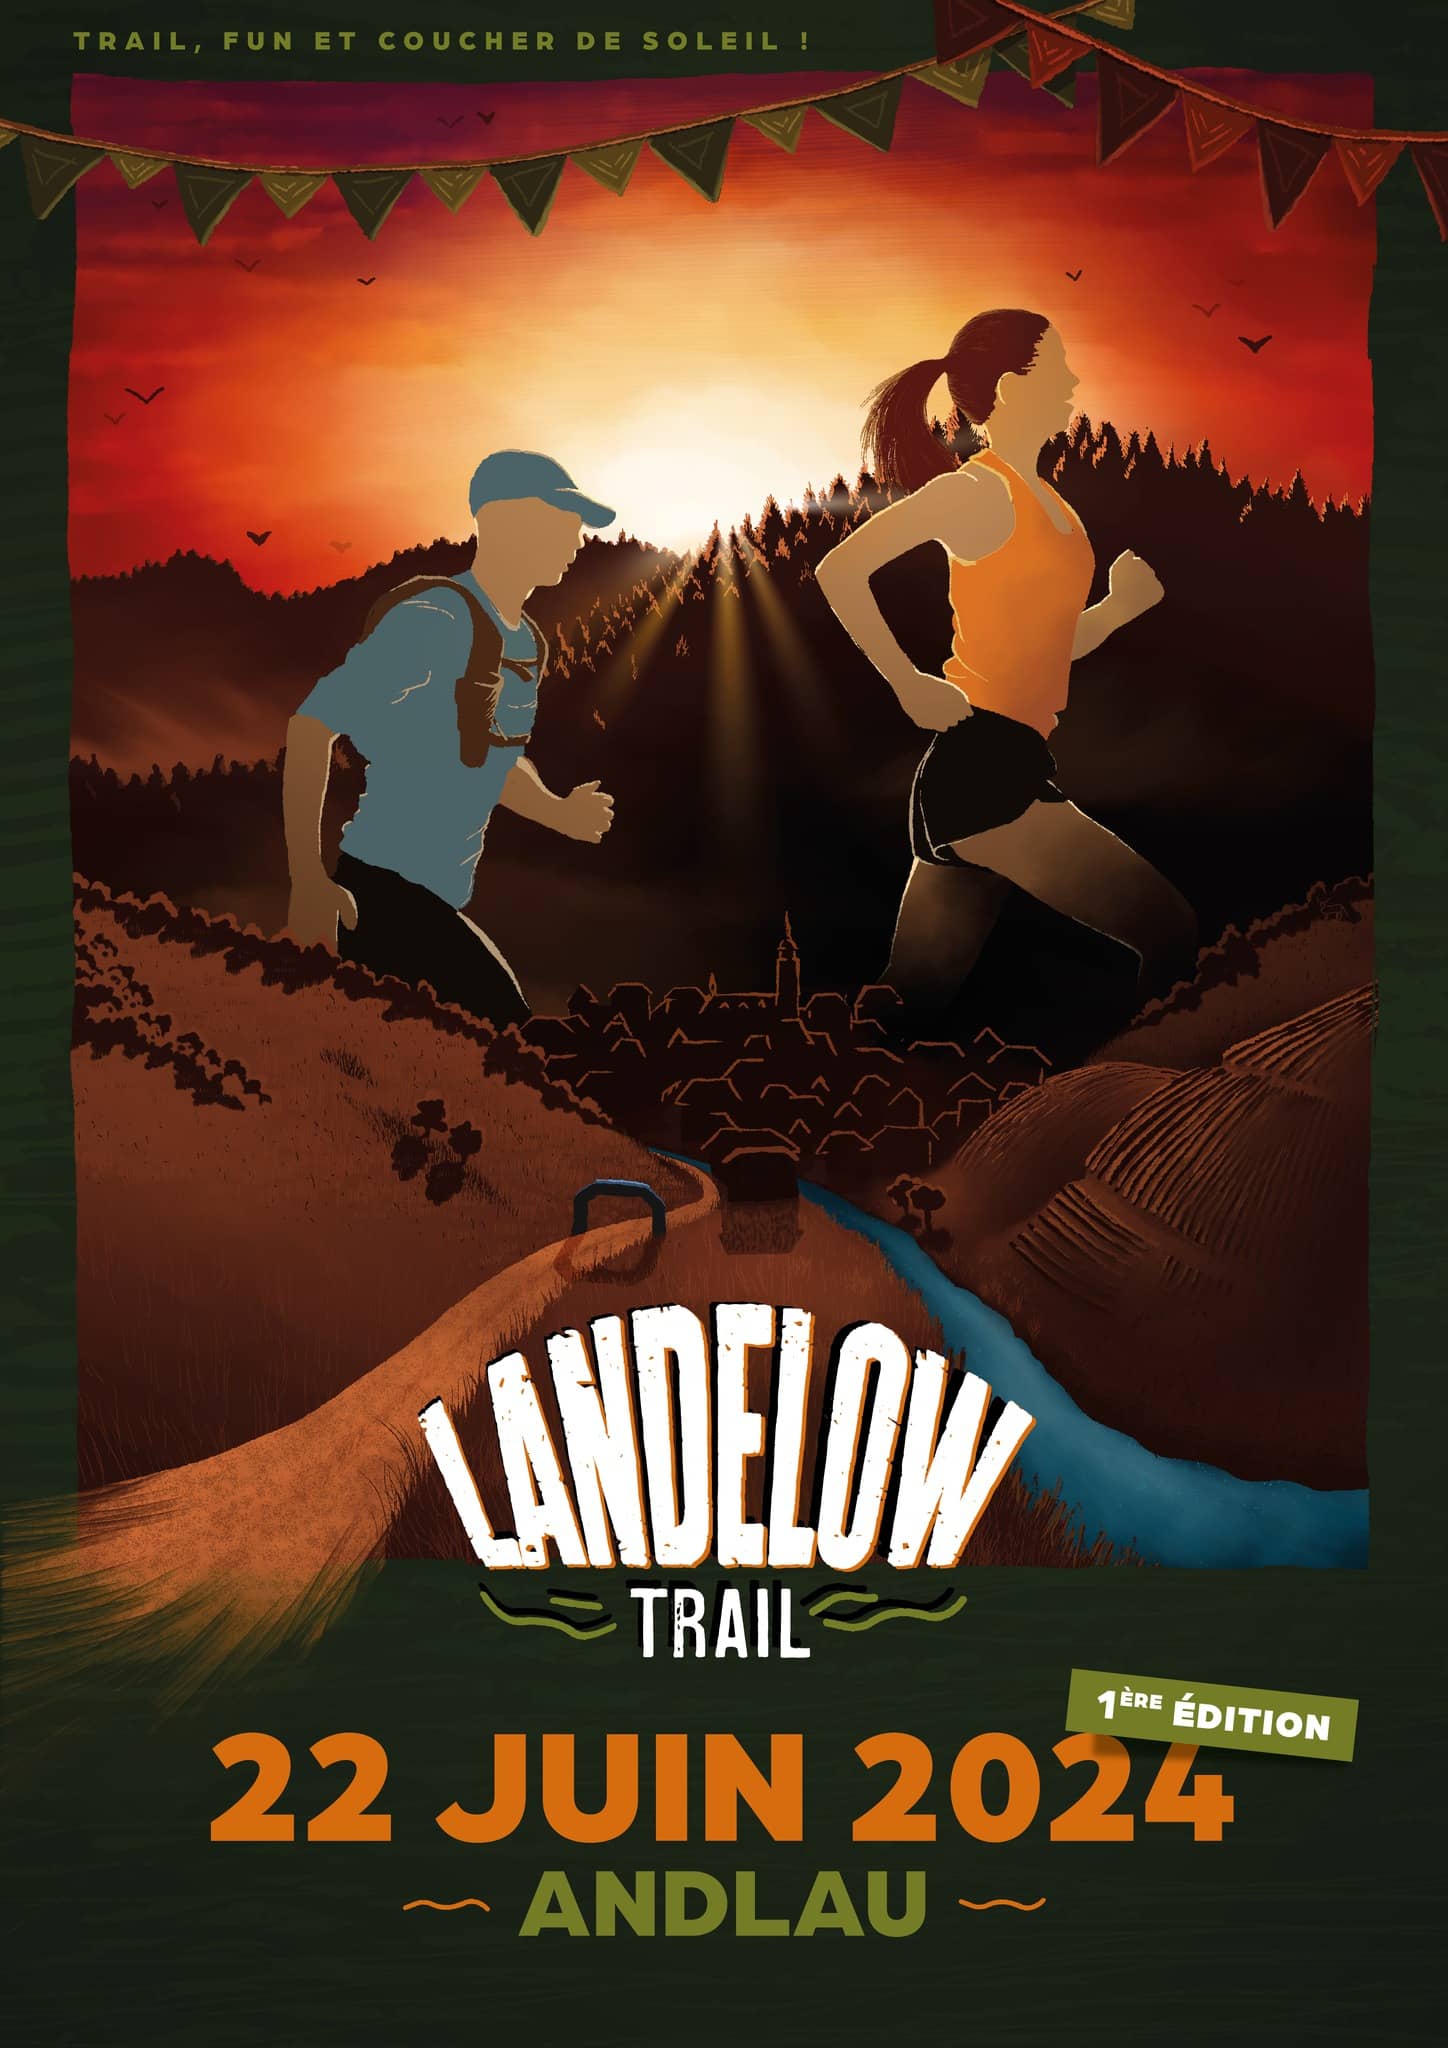 Affiche Landelow Trail 2024